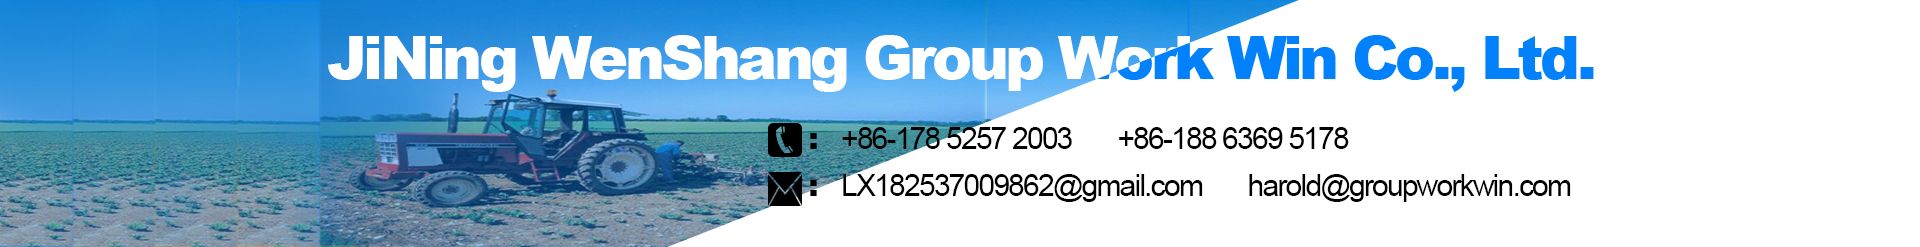 JiNing WenShang Group Work Win Co., Ltd.